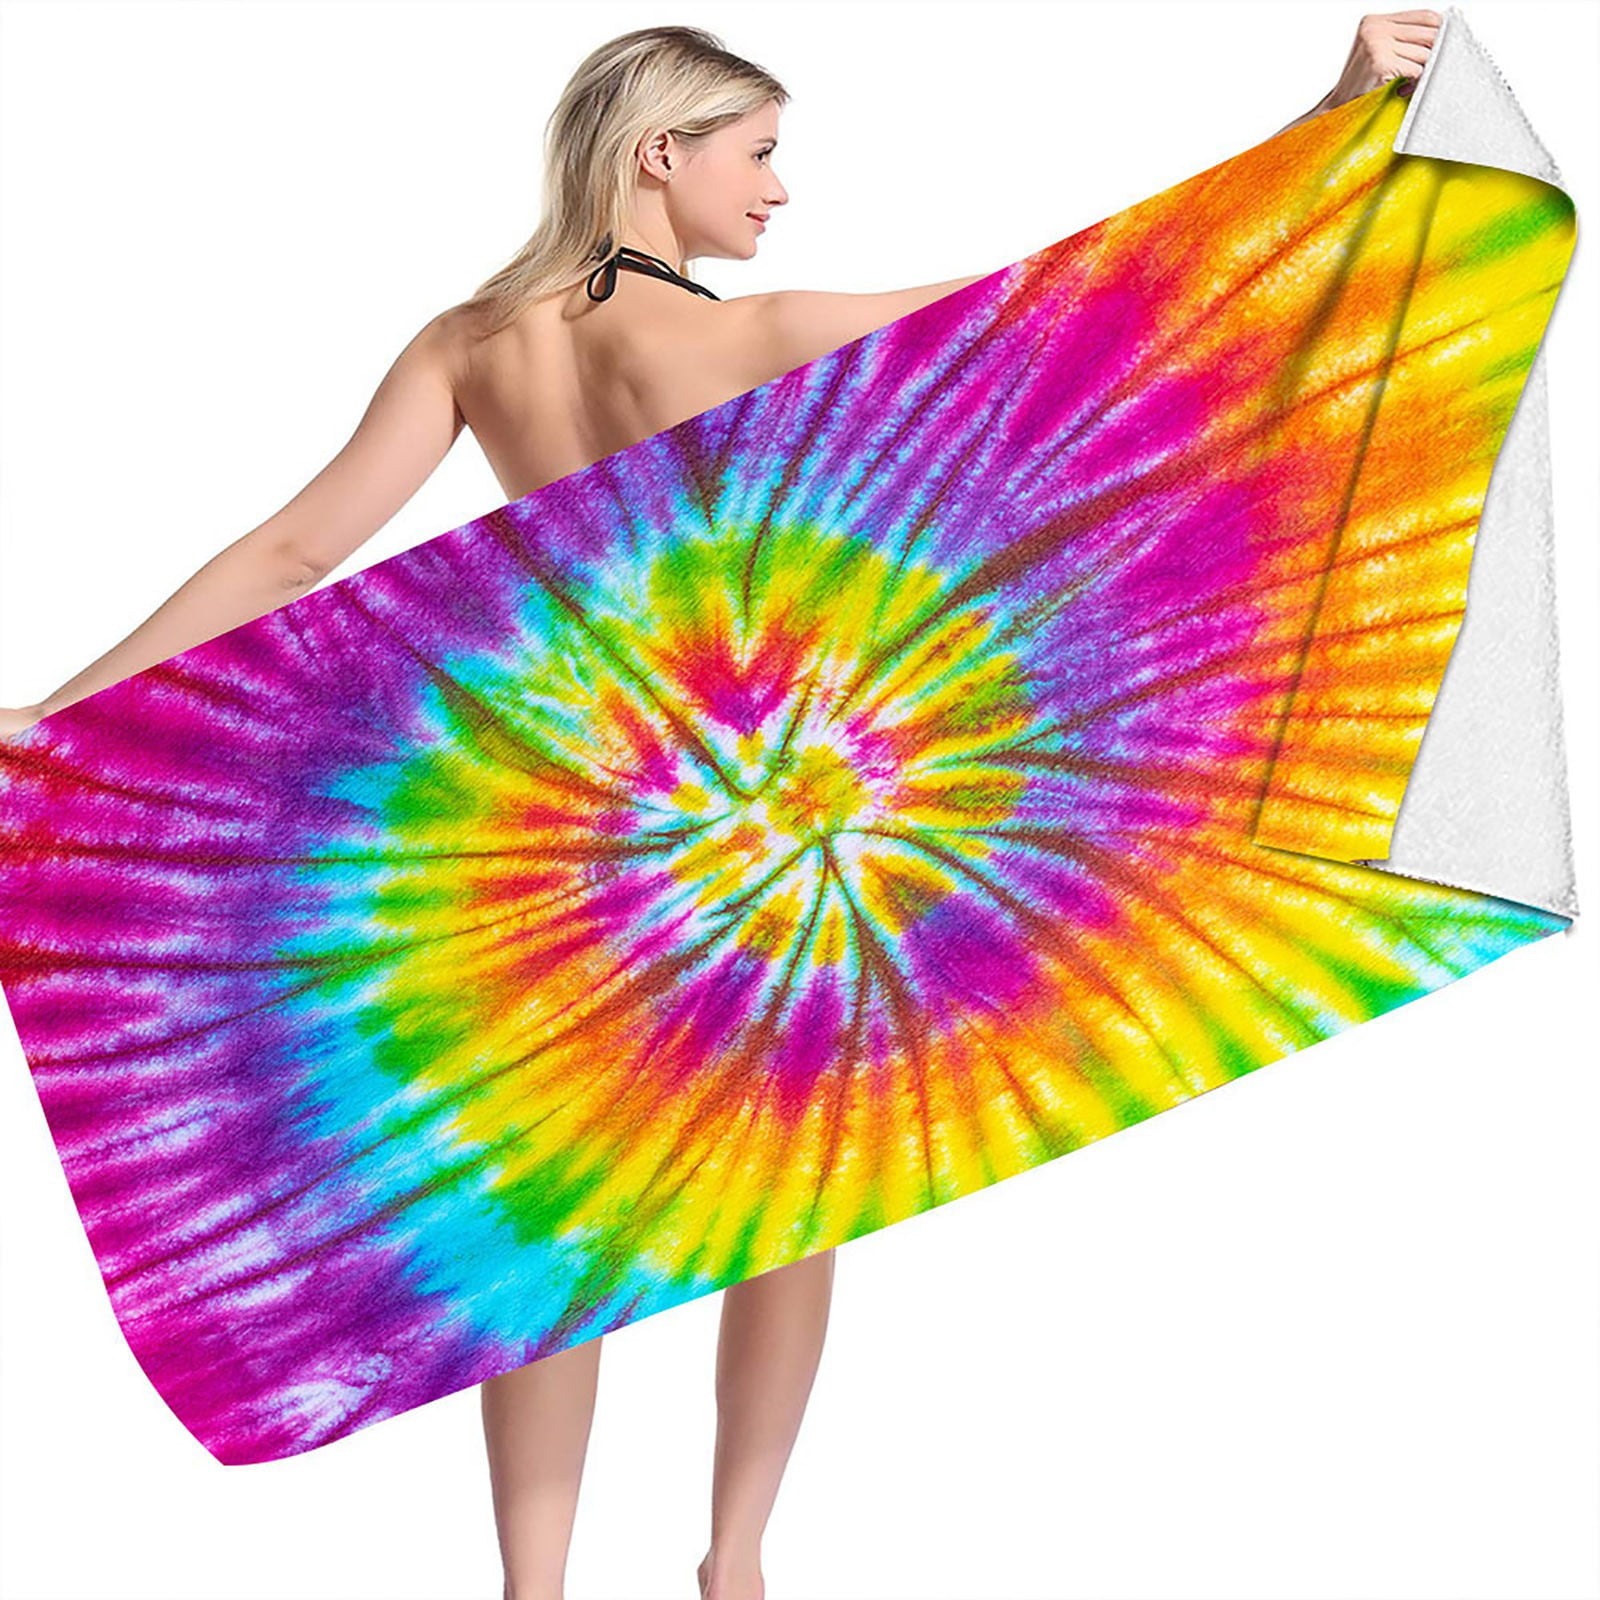 Rainbow Dtf Printer Bundle for Robes Bath Towels Beach Towels Tote